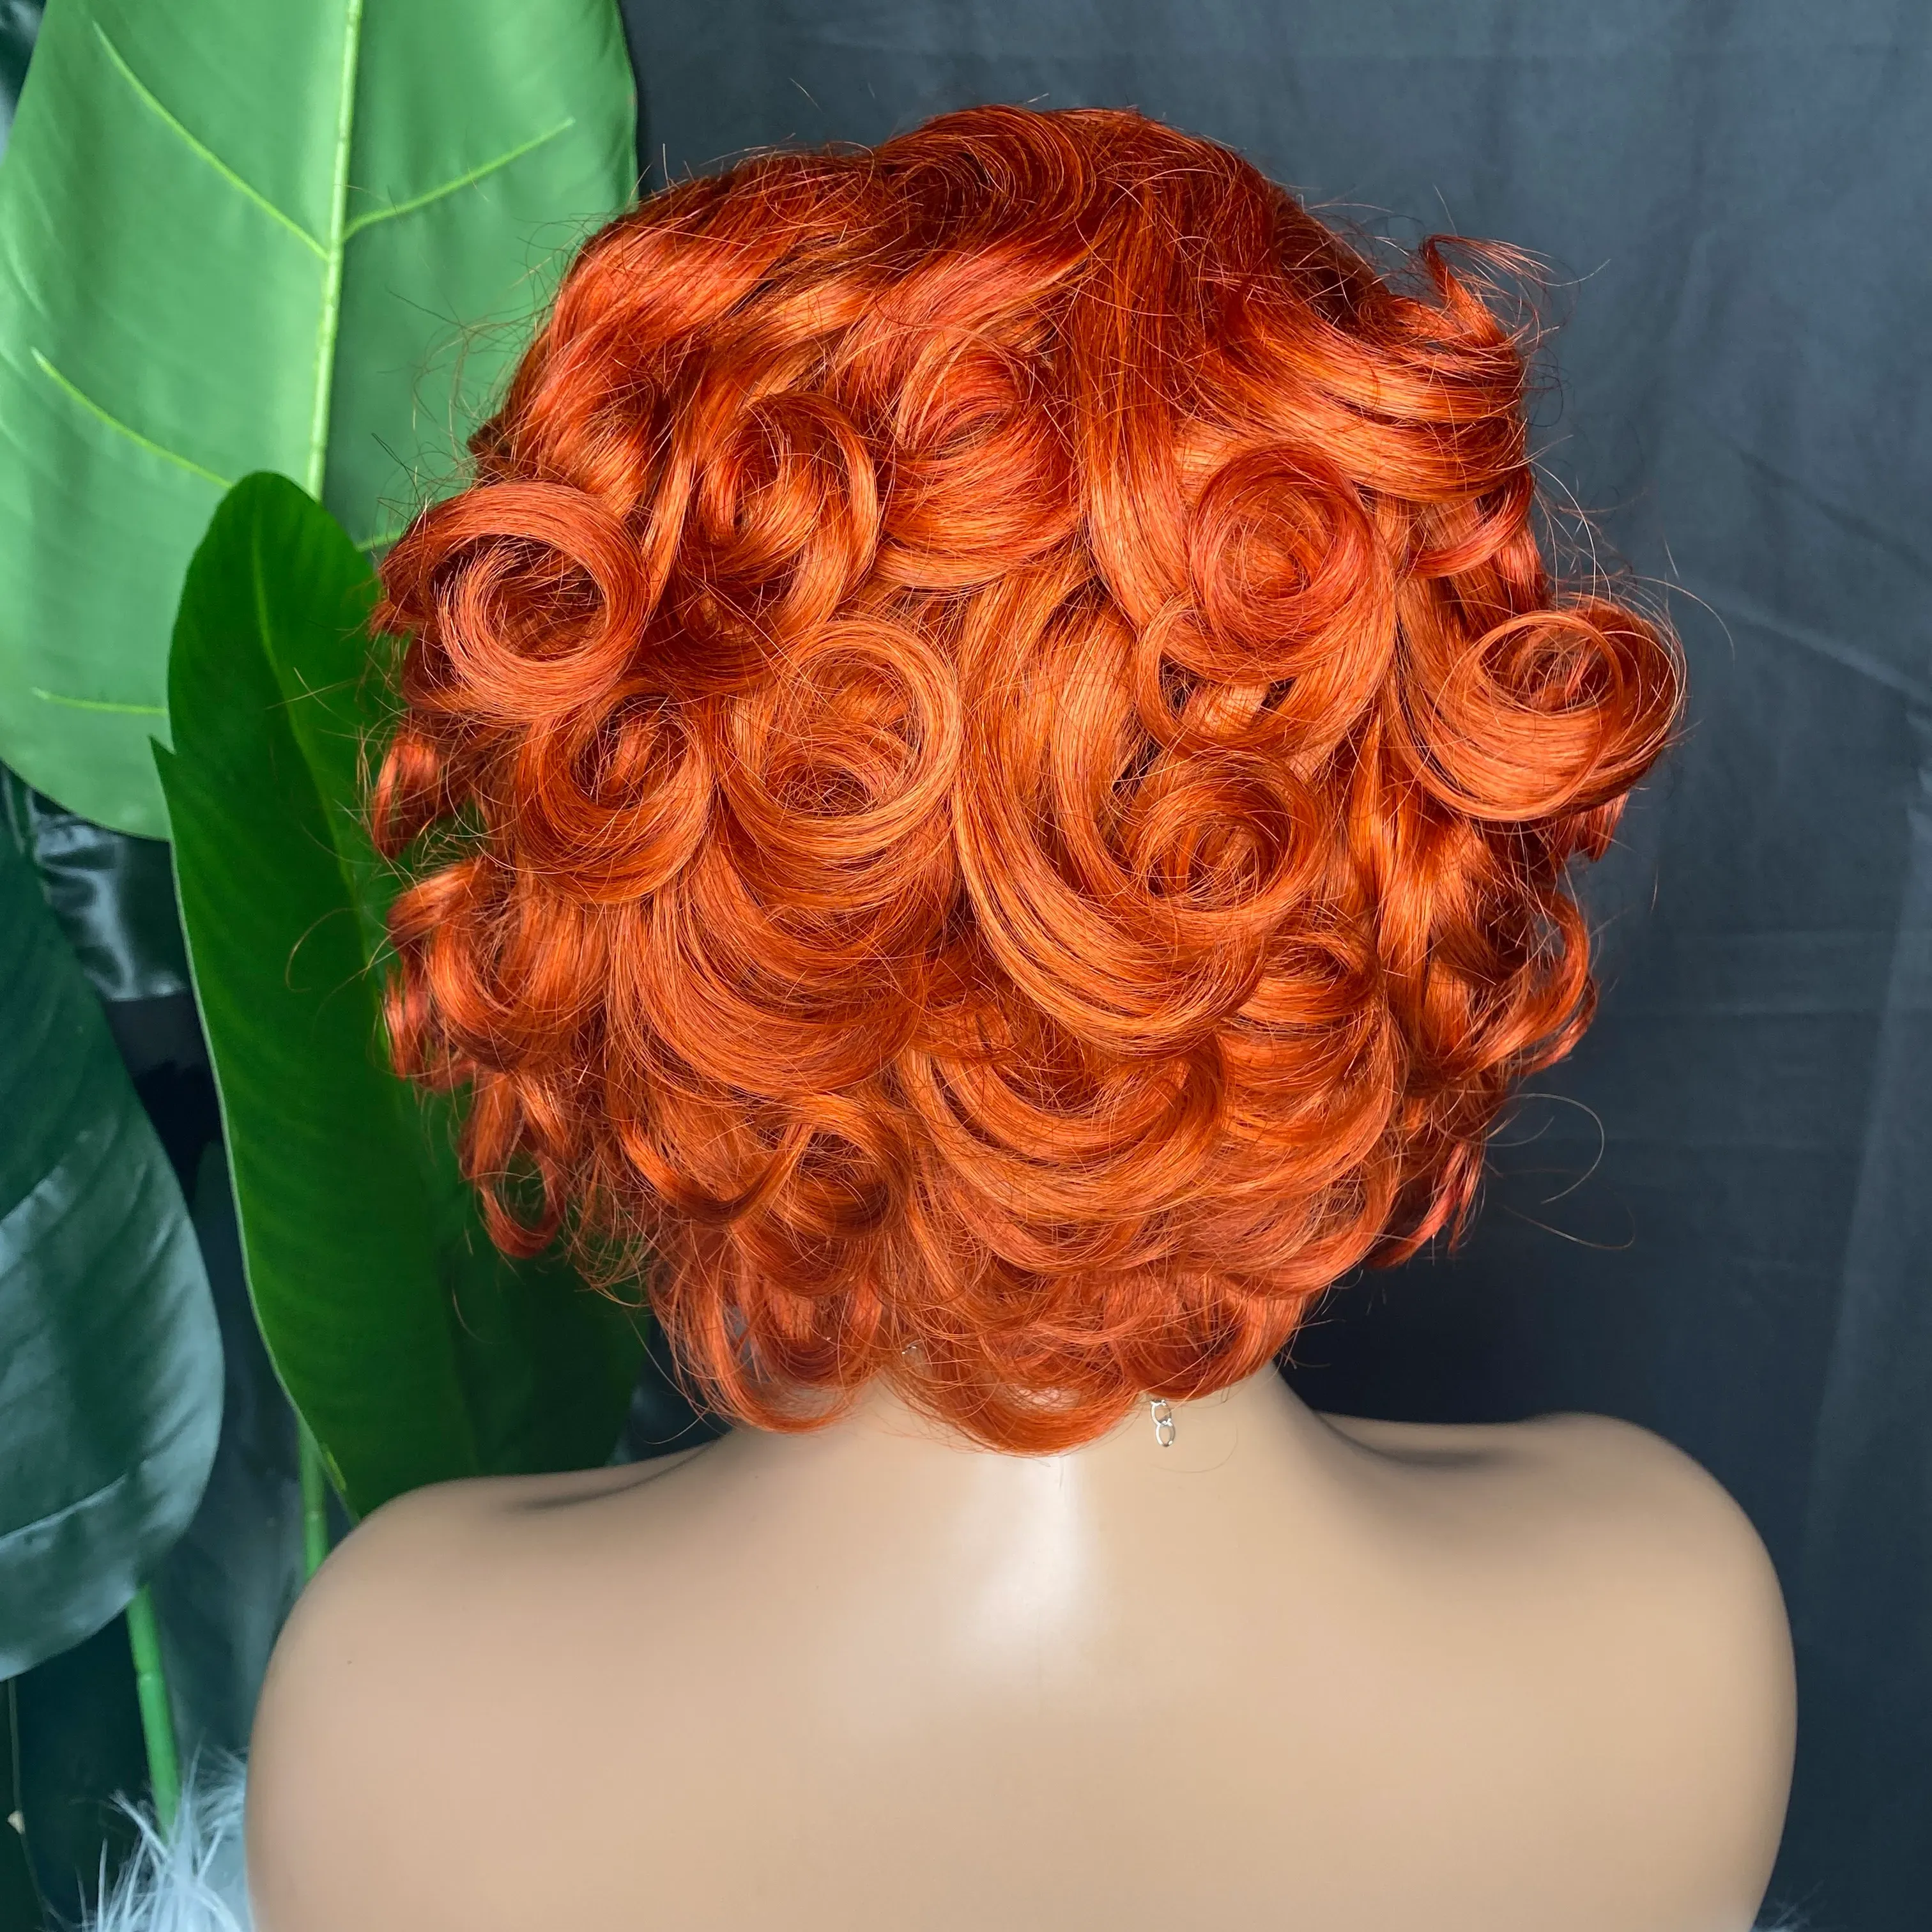 100% Raw Remy Virgin Human Hair Orange Pixie Curly Cut Short Wig Peruvian Indian Malaysian Hair Wig